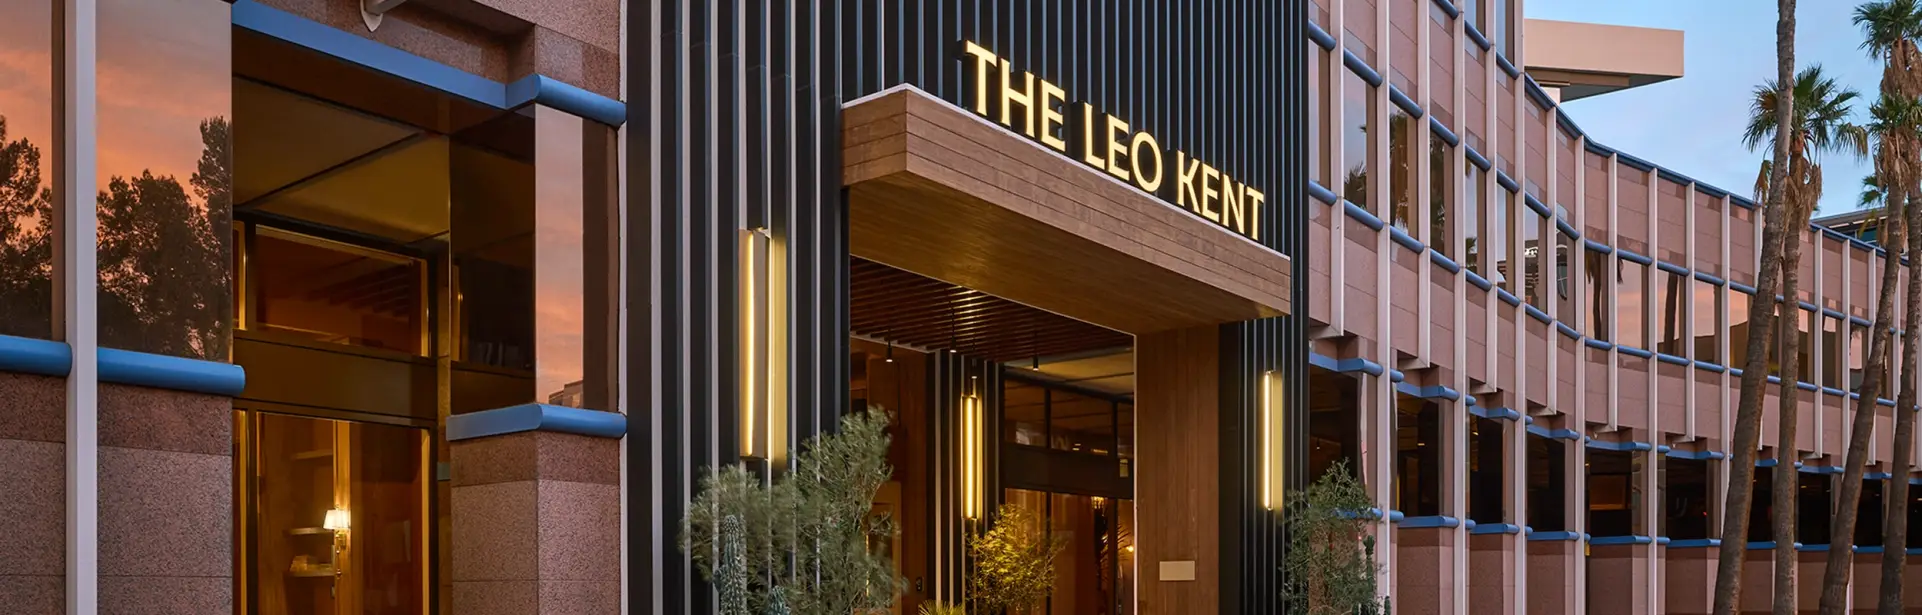 The Leo Kent Hotel